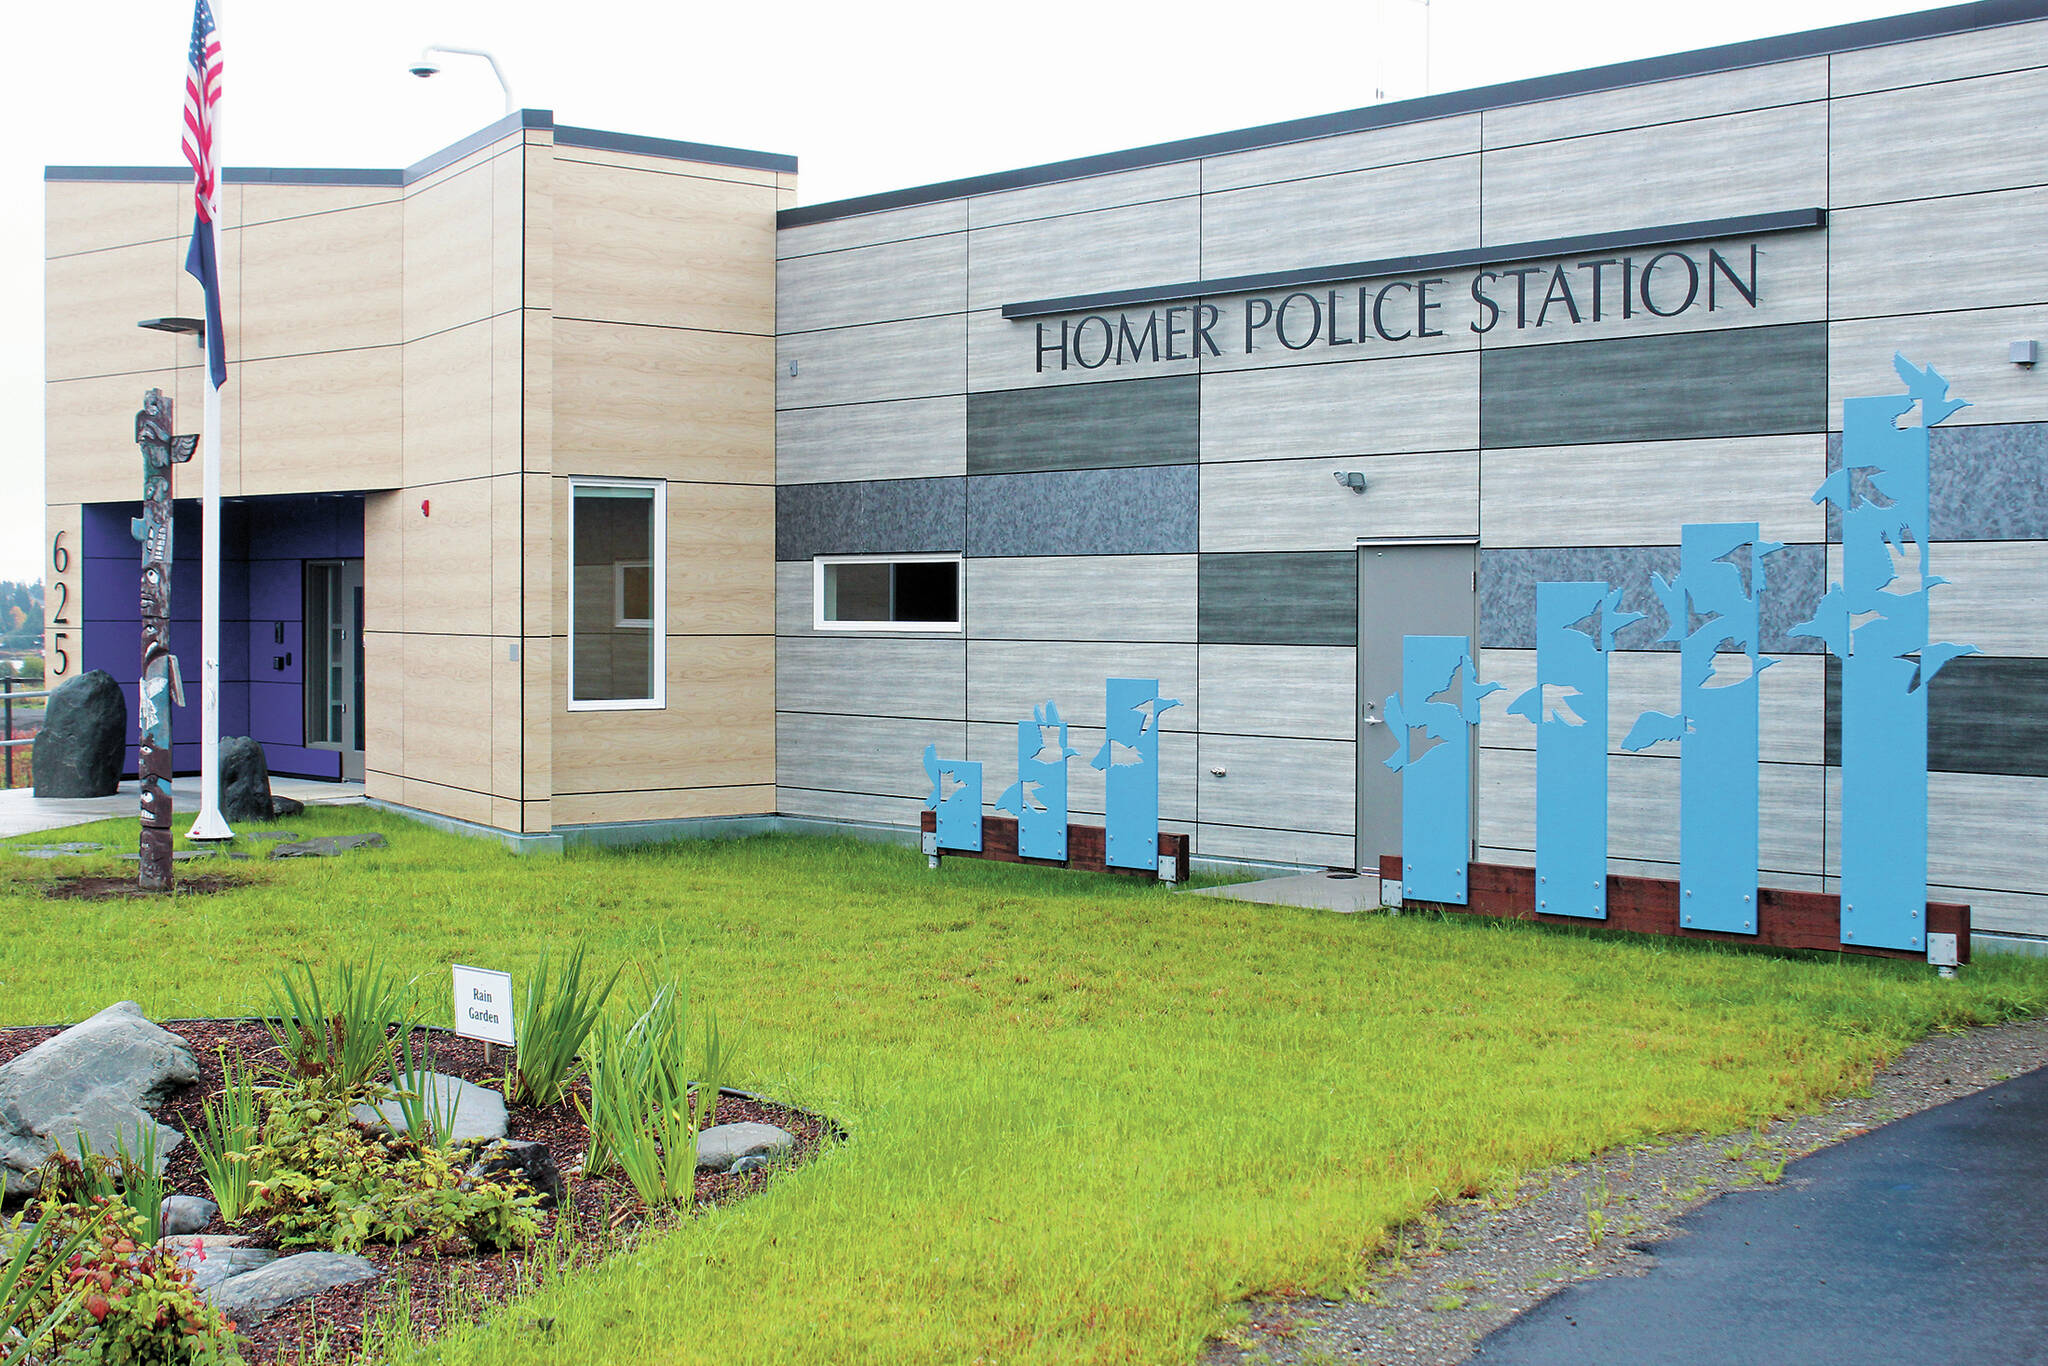 The Homer Police Station, as seen Thursday, Sept. 24, 2020, in Homer, Alaska. (Photo by Megan Pacer/Homer News file)